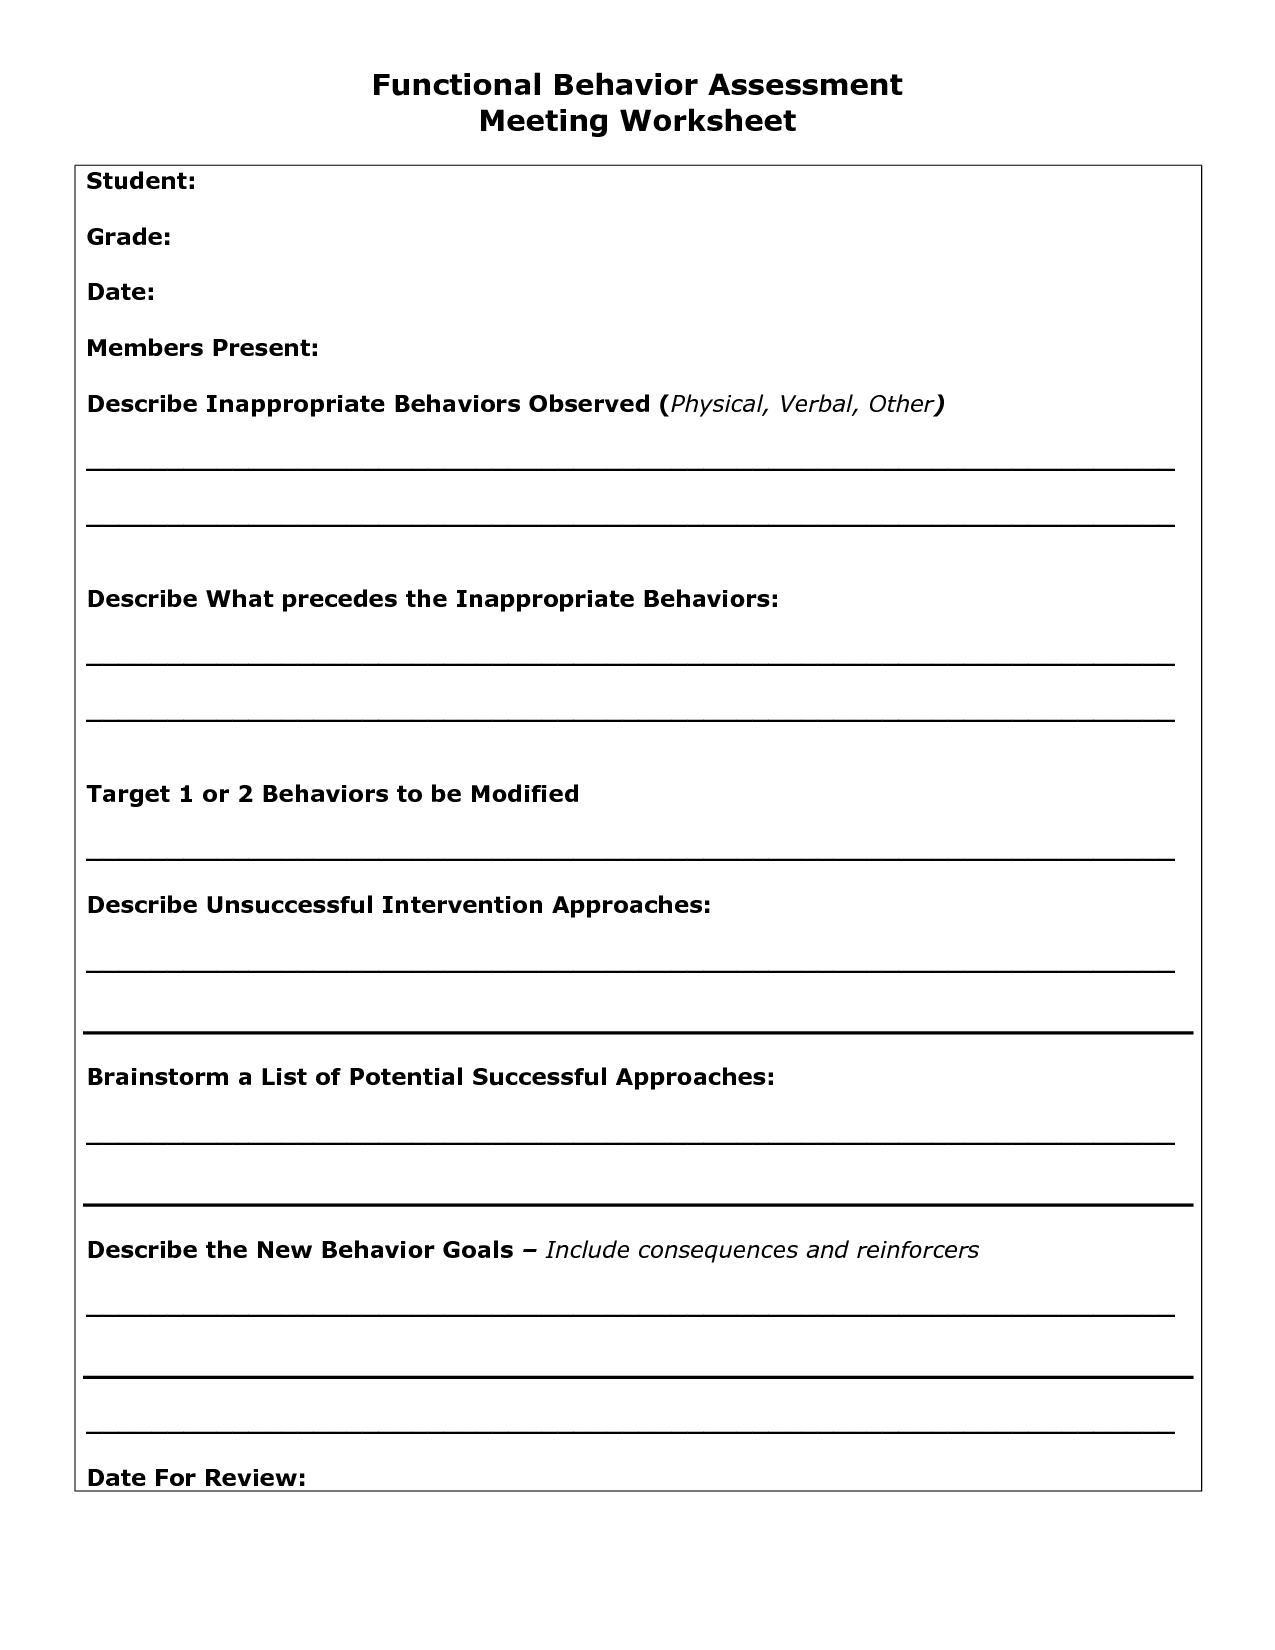 Student Behavior Worksheet Image